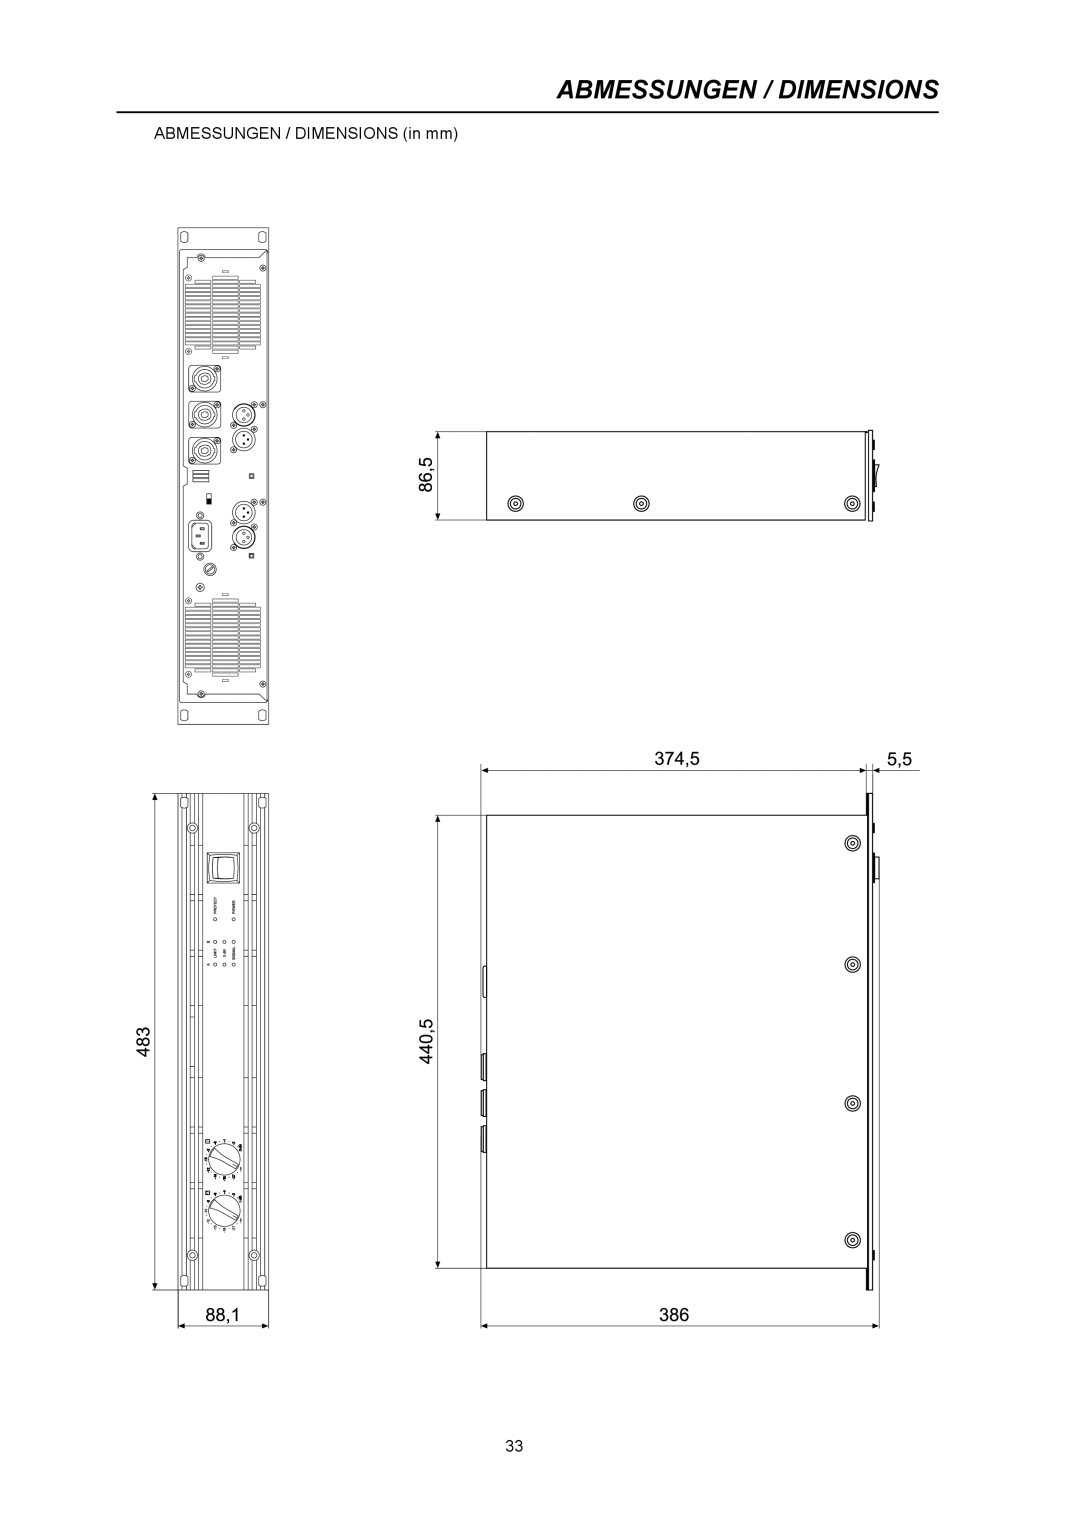 Dynacord CL 800 owner manual Abmessungen / Dimensions, ABMESSUNGEN / DIMENSIONS in mm 